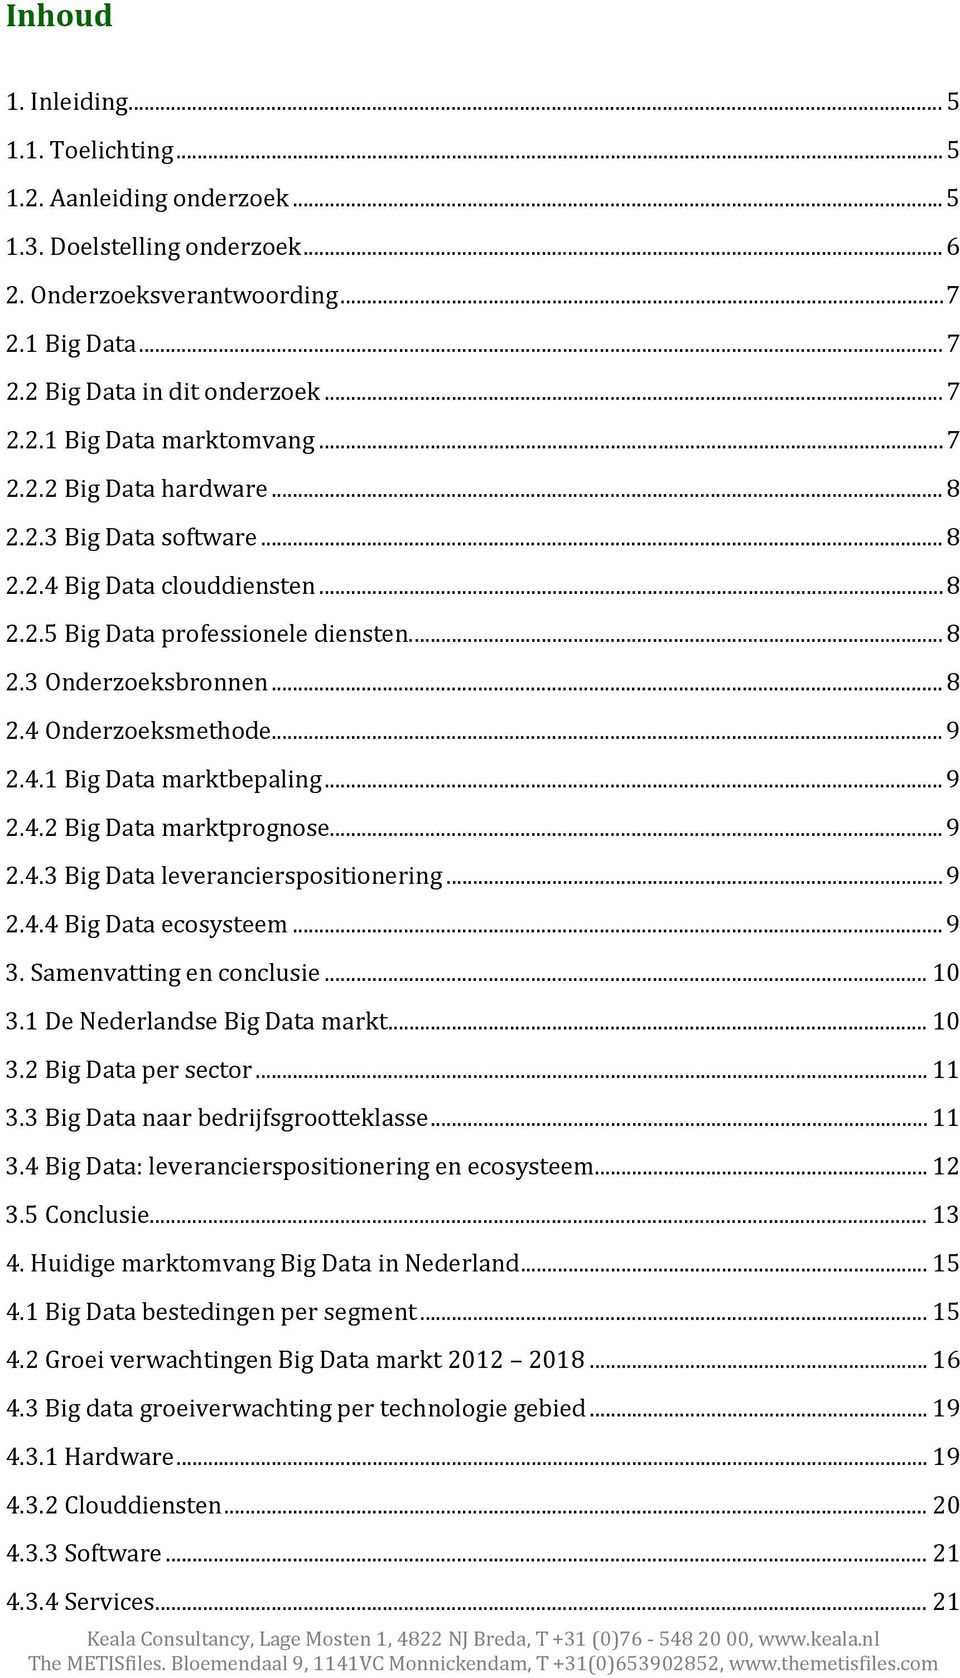 .. 9 2.4.2 Big Data marktprognose... 9 2.4.3 Big Data leverancierspositionering... 9 2.4.4 Big Data ecosysteem... 9 3. Samenvatting en conclusie... 10 3.1 De Nederlandse Big Data markt... 10 3.2 Big Data per sector.